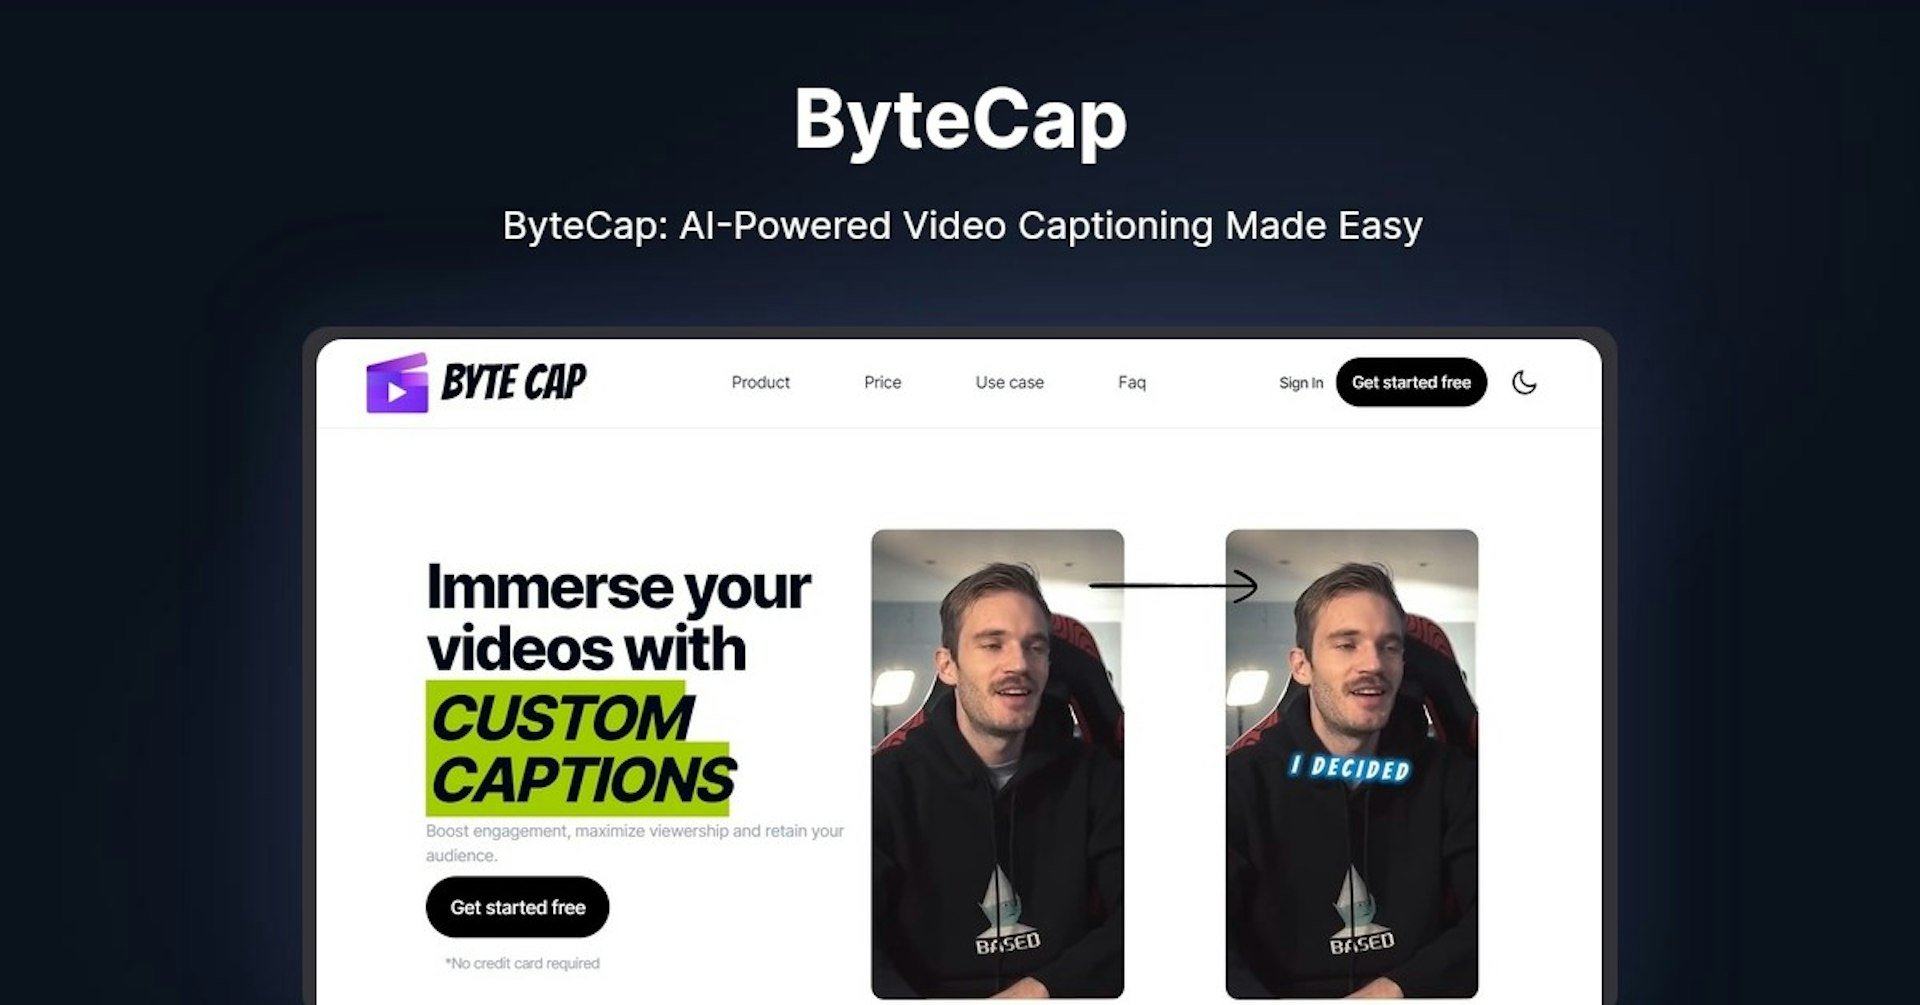 ByteCap